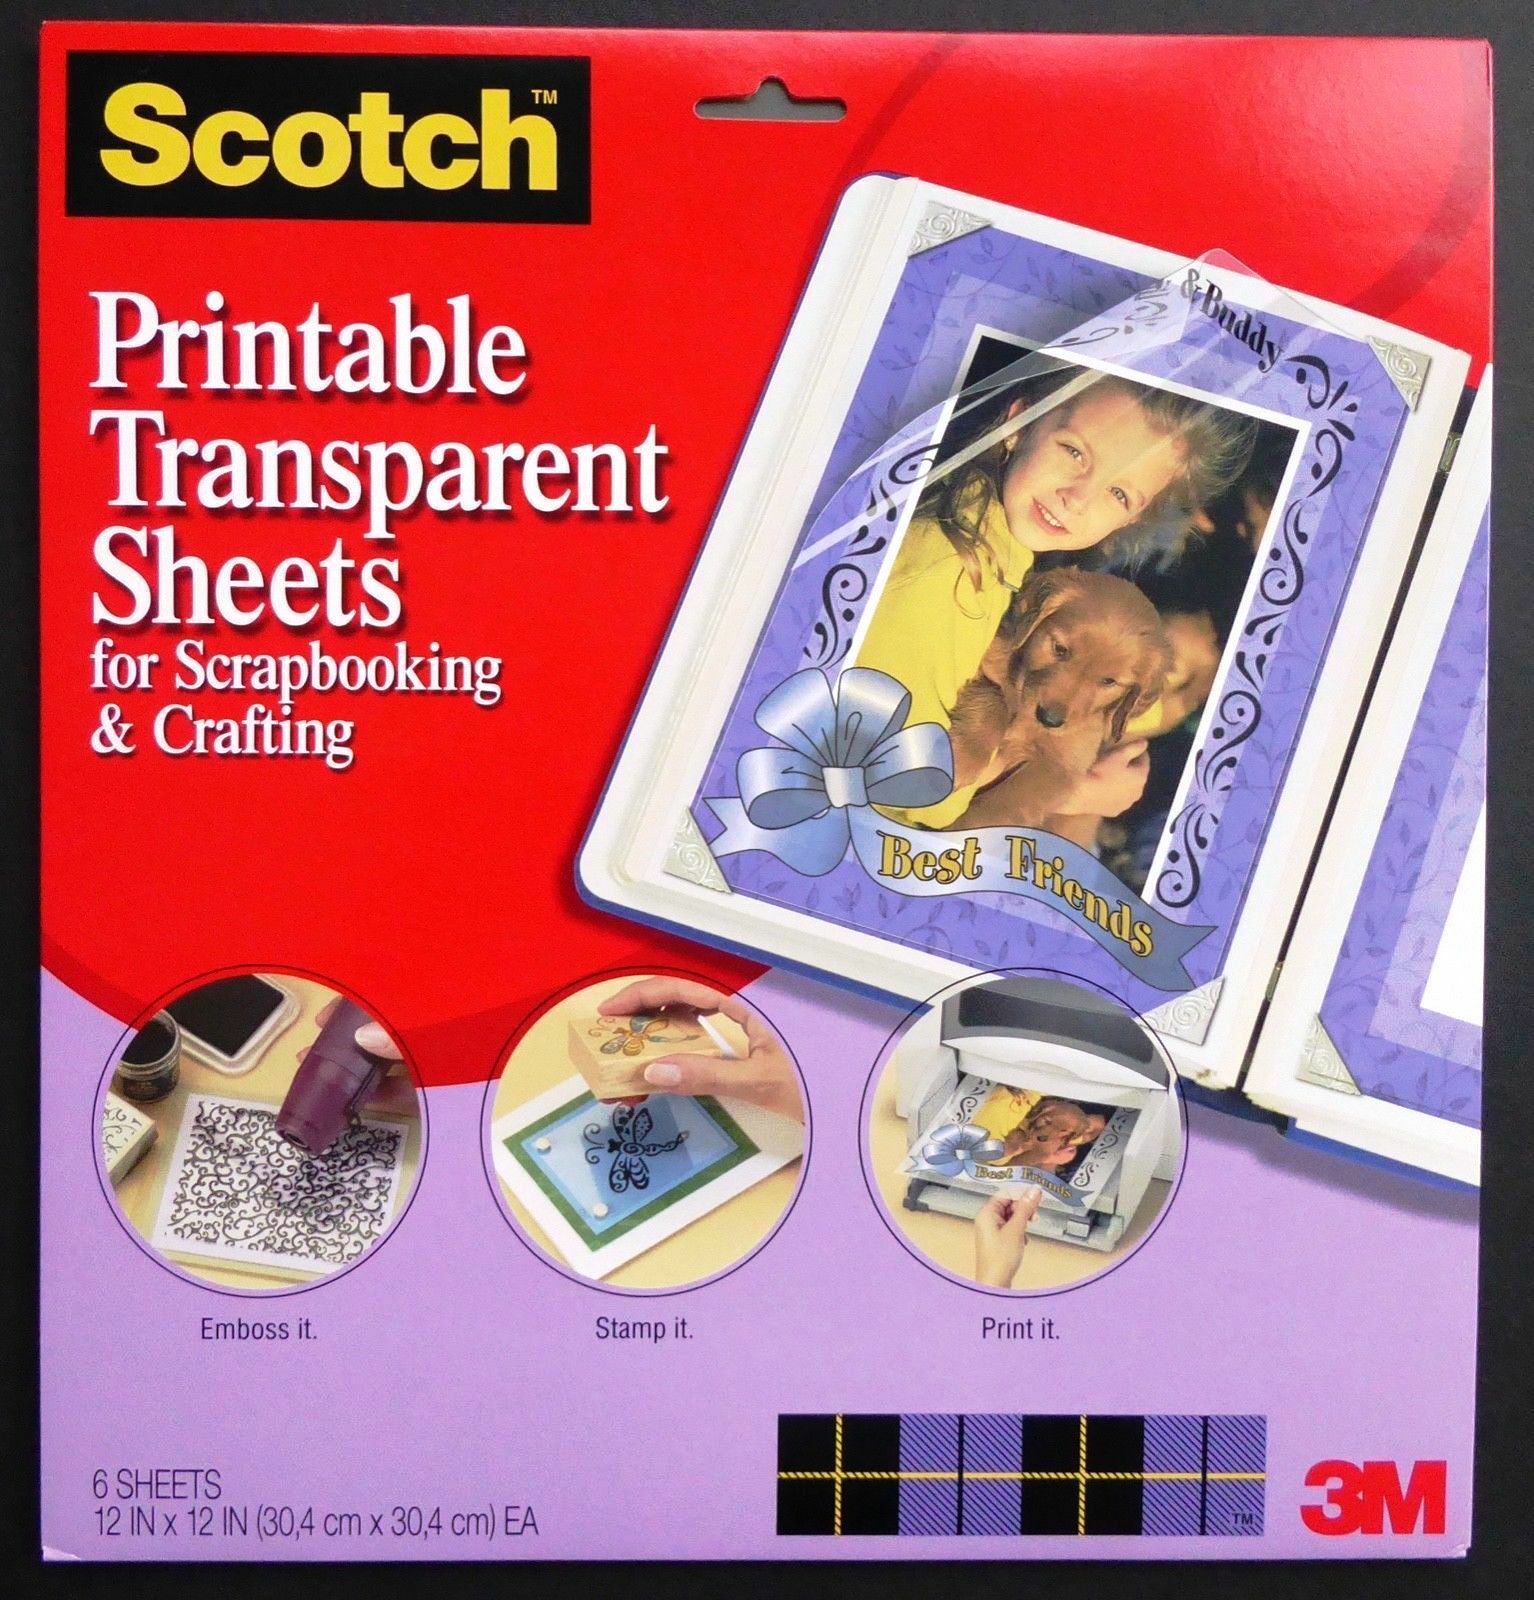 Scotch 3m Printable Transparent Sheets Scrapbooking~crafts~emboss~stamp 12"x12".